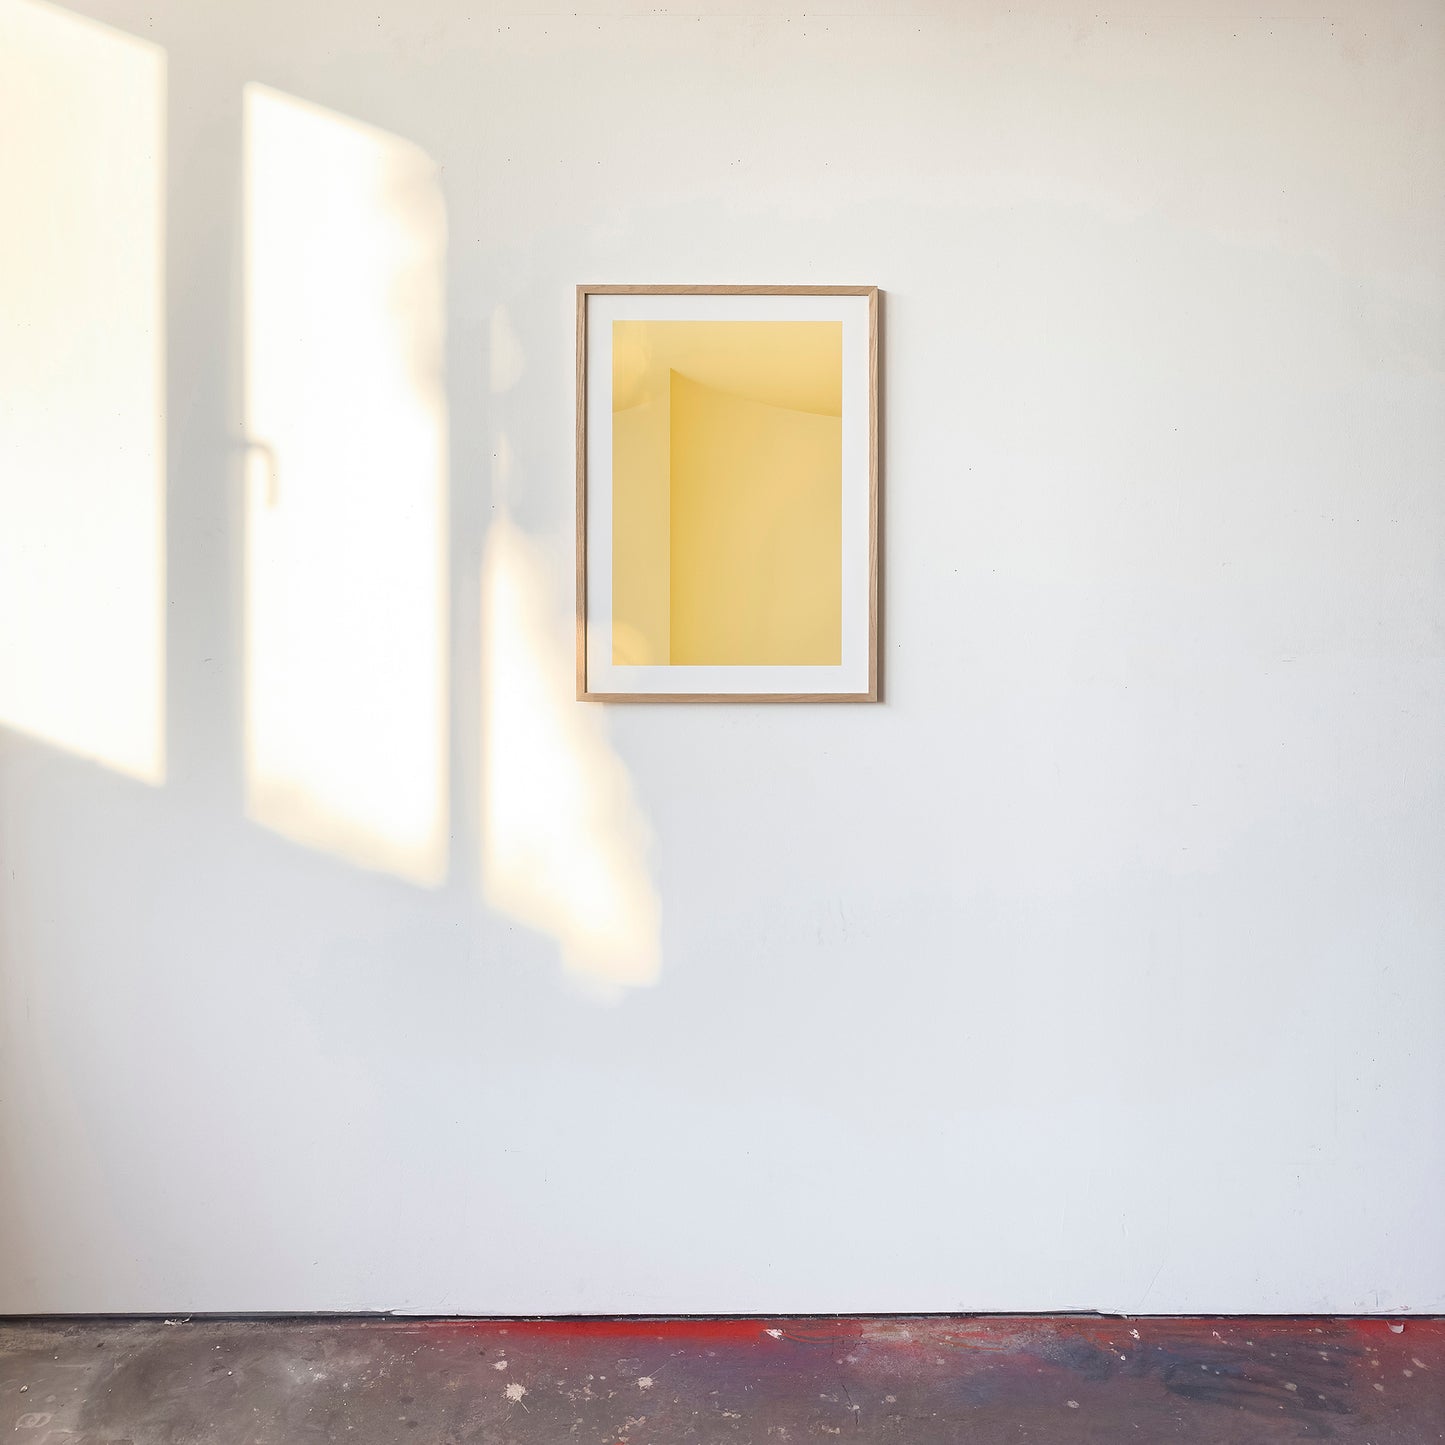 Kunstdruck im Bilderrahmen im Atelier, Motiv gelb monochromr Raum, Titel Styr IV - Edition